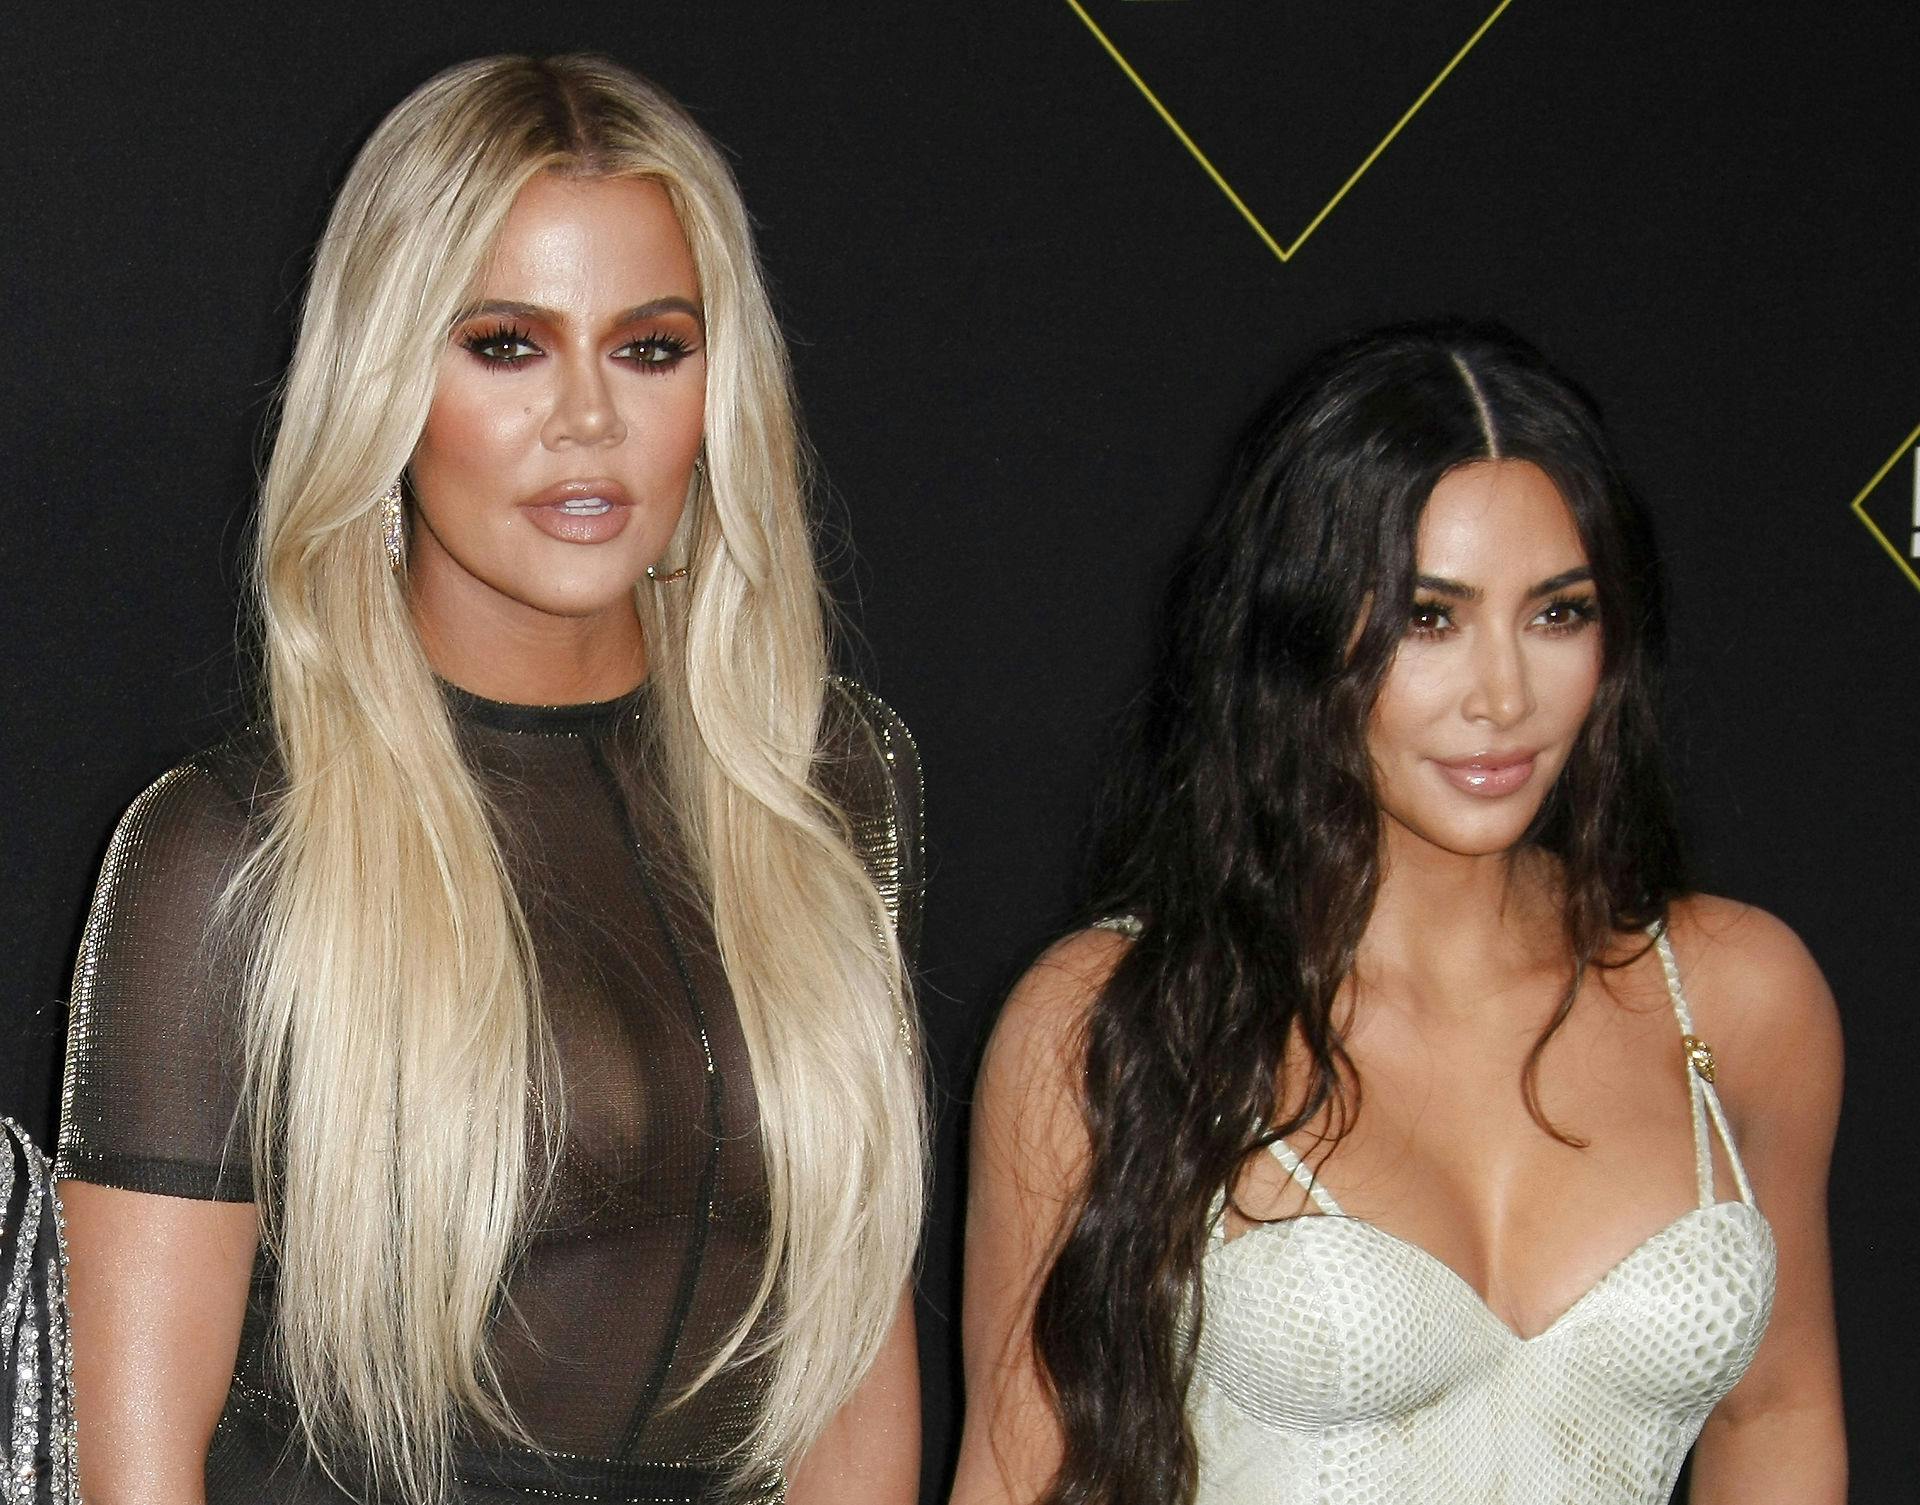 Khloe Kardashian ses her med sin søster, Kim Kardashian West.